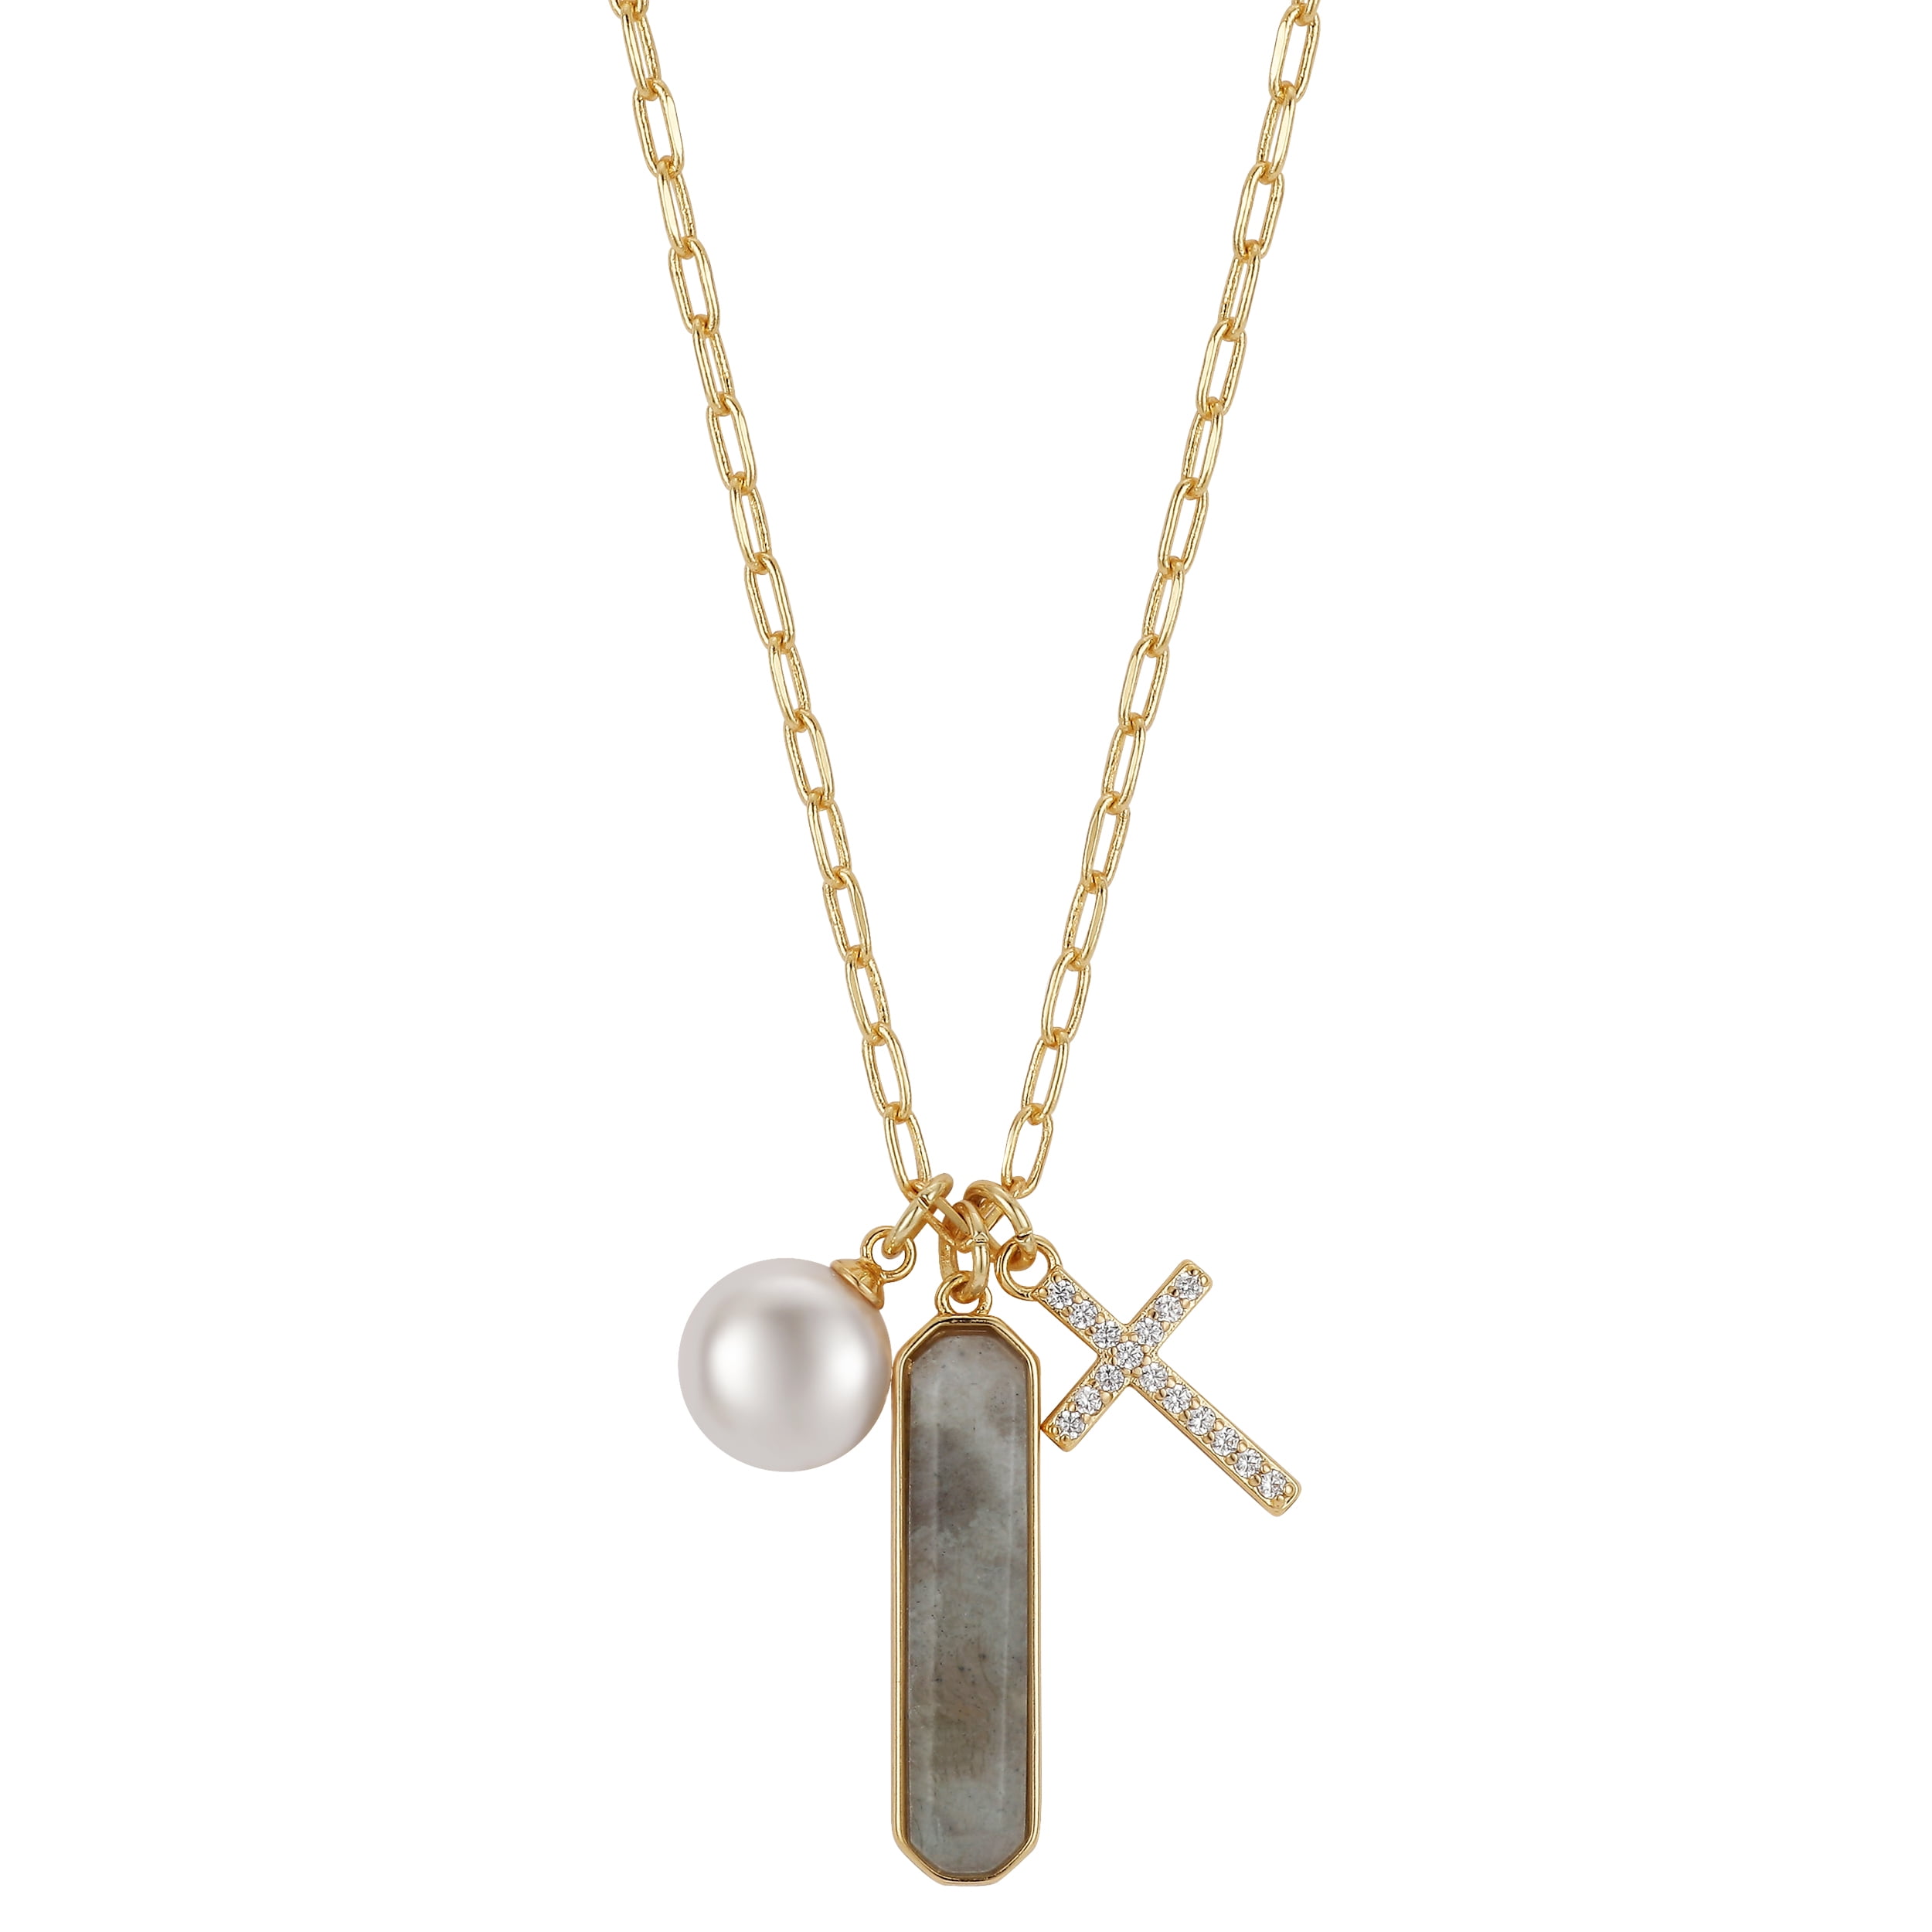 Sale 14K Gold-filled/Vermeil Framed Labradorite Stone pendant Necklace/Choker